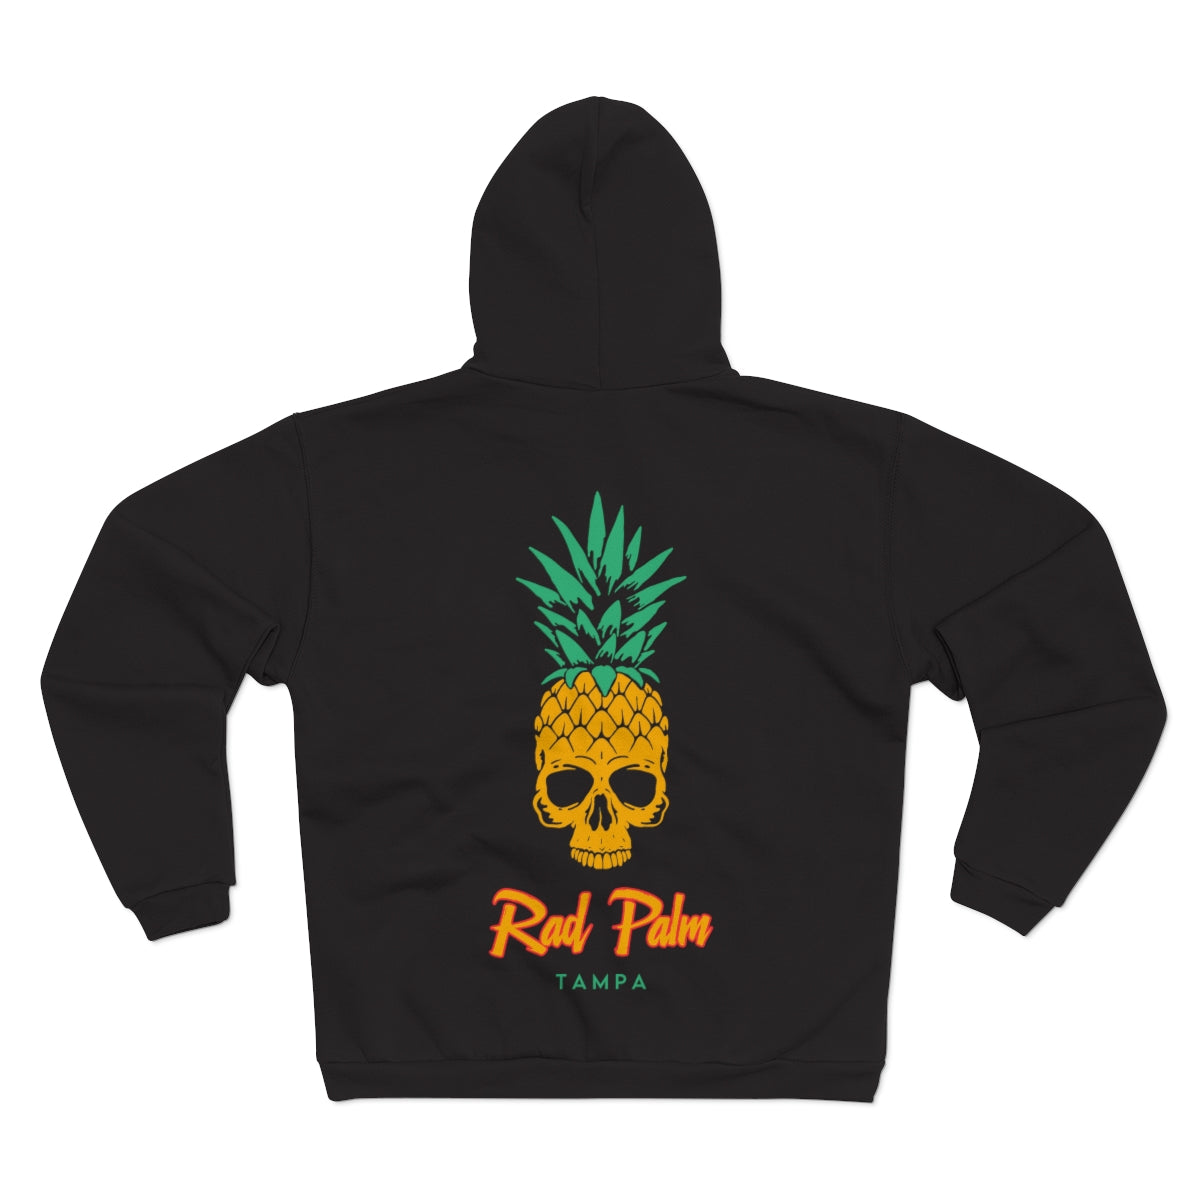 Rad Palm Pineapple Skull Unisex Hooded Zip Sweatshirt